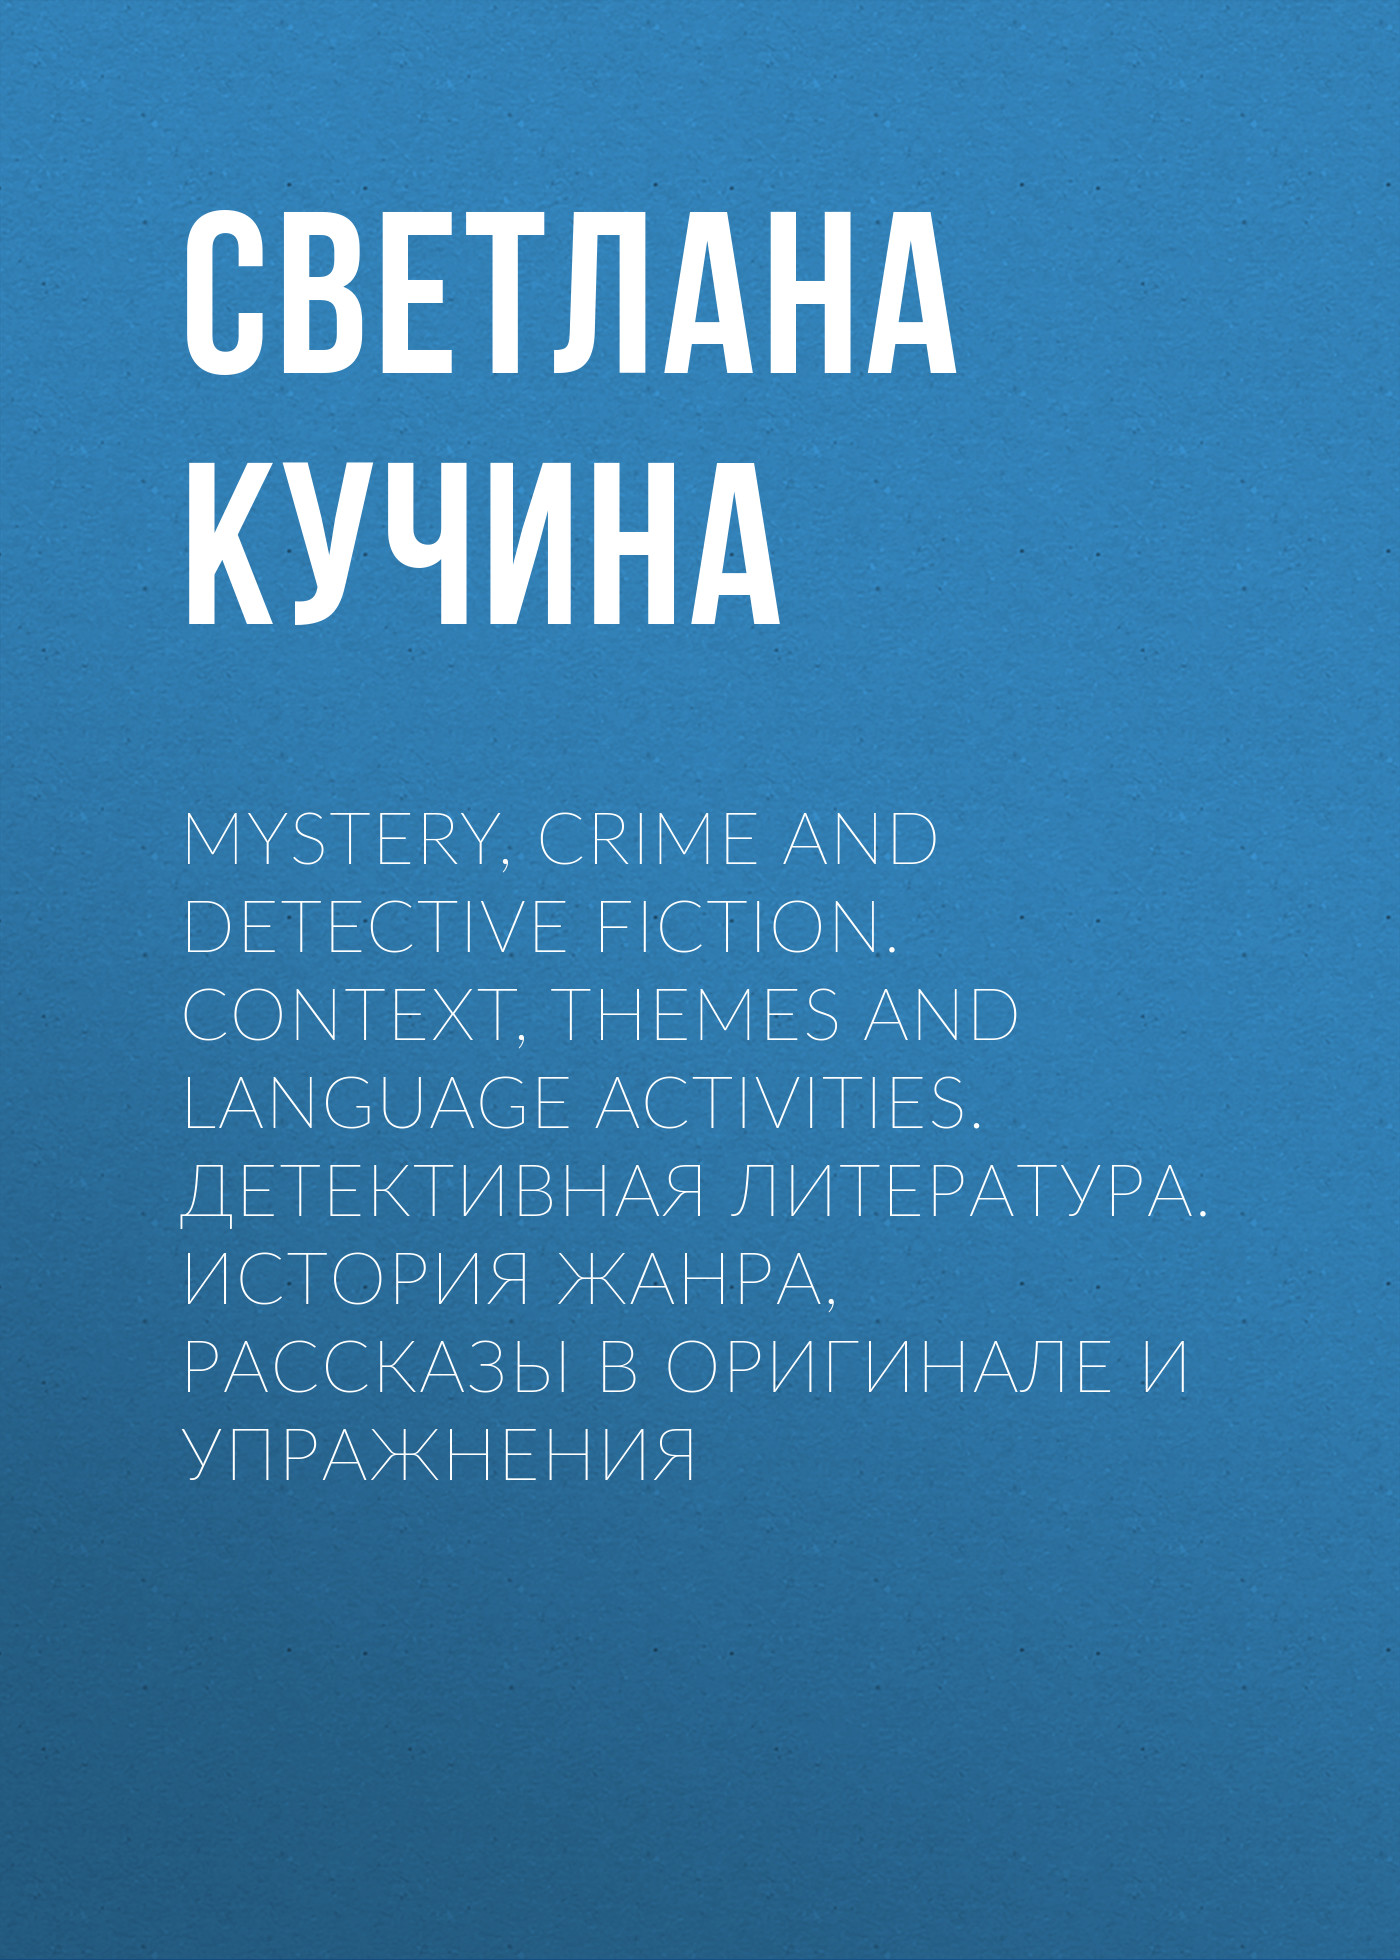 Mystery, Crime and Detective Fiction. Context, Themes and Language Activities.Детективная литература. История жанра, рассказы в оригинале и упражнения